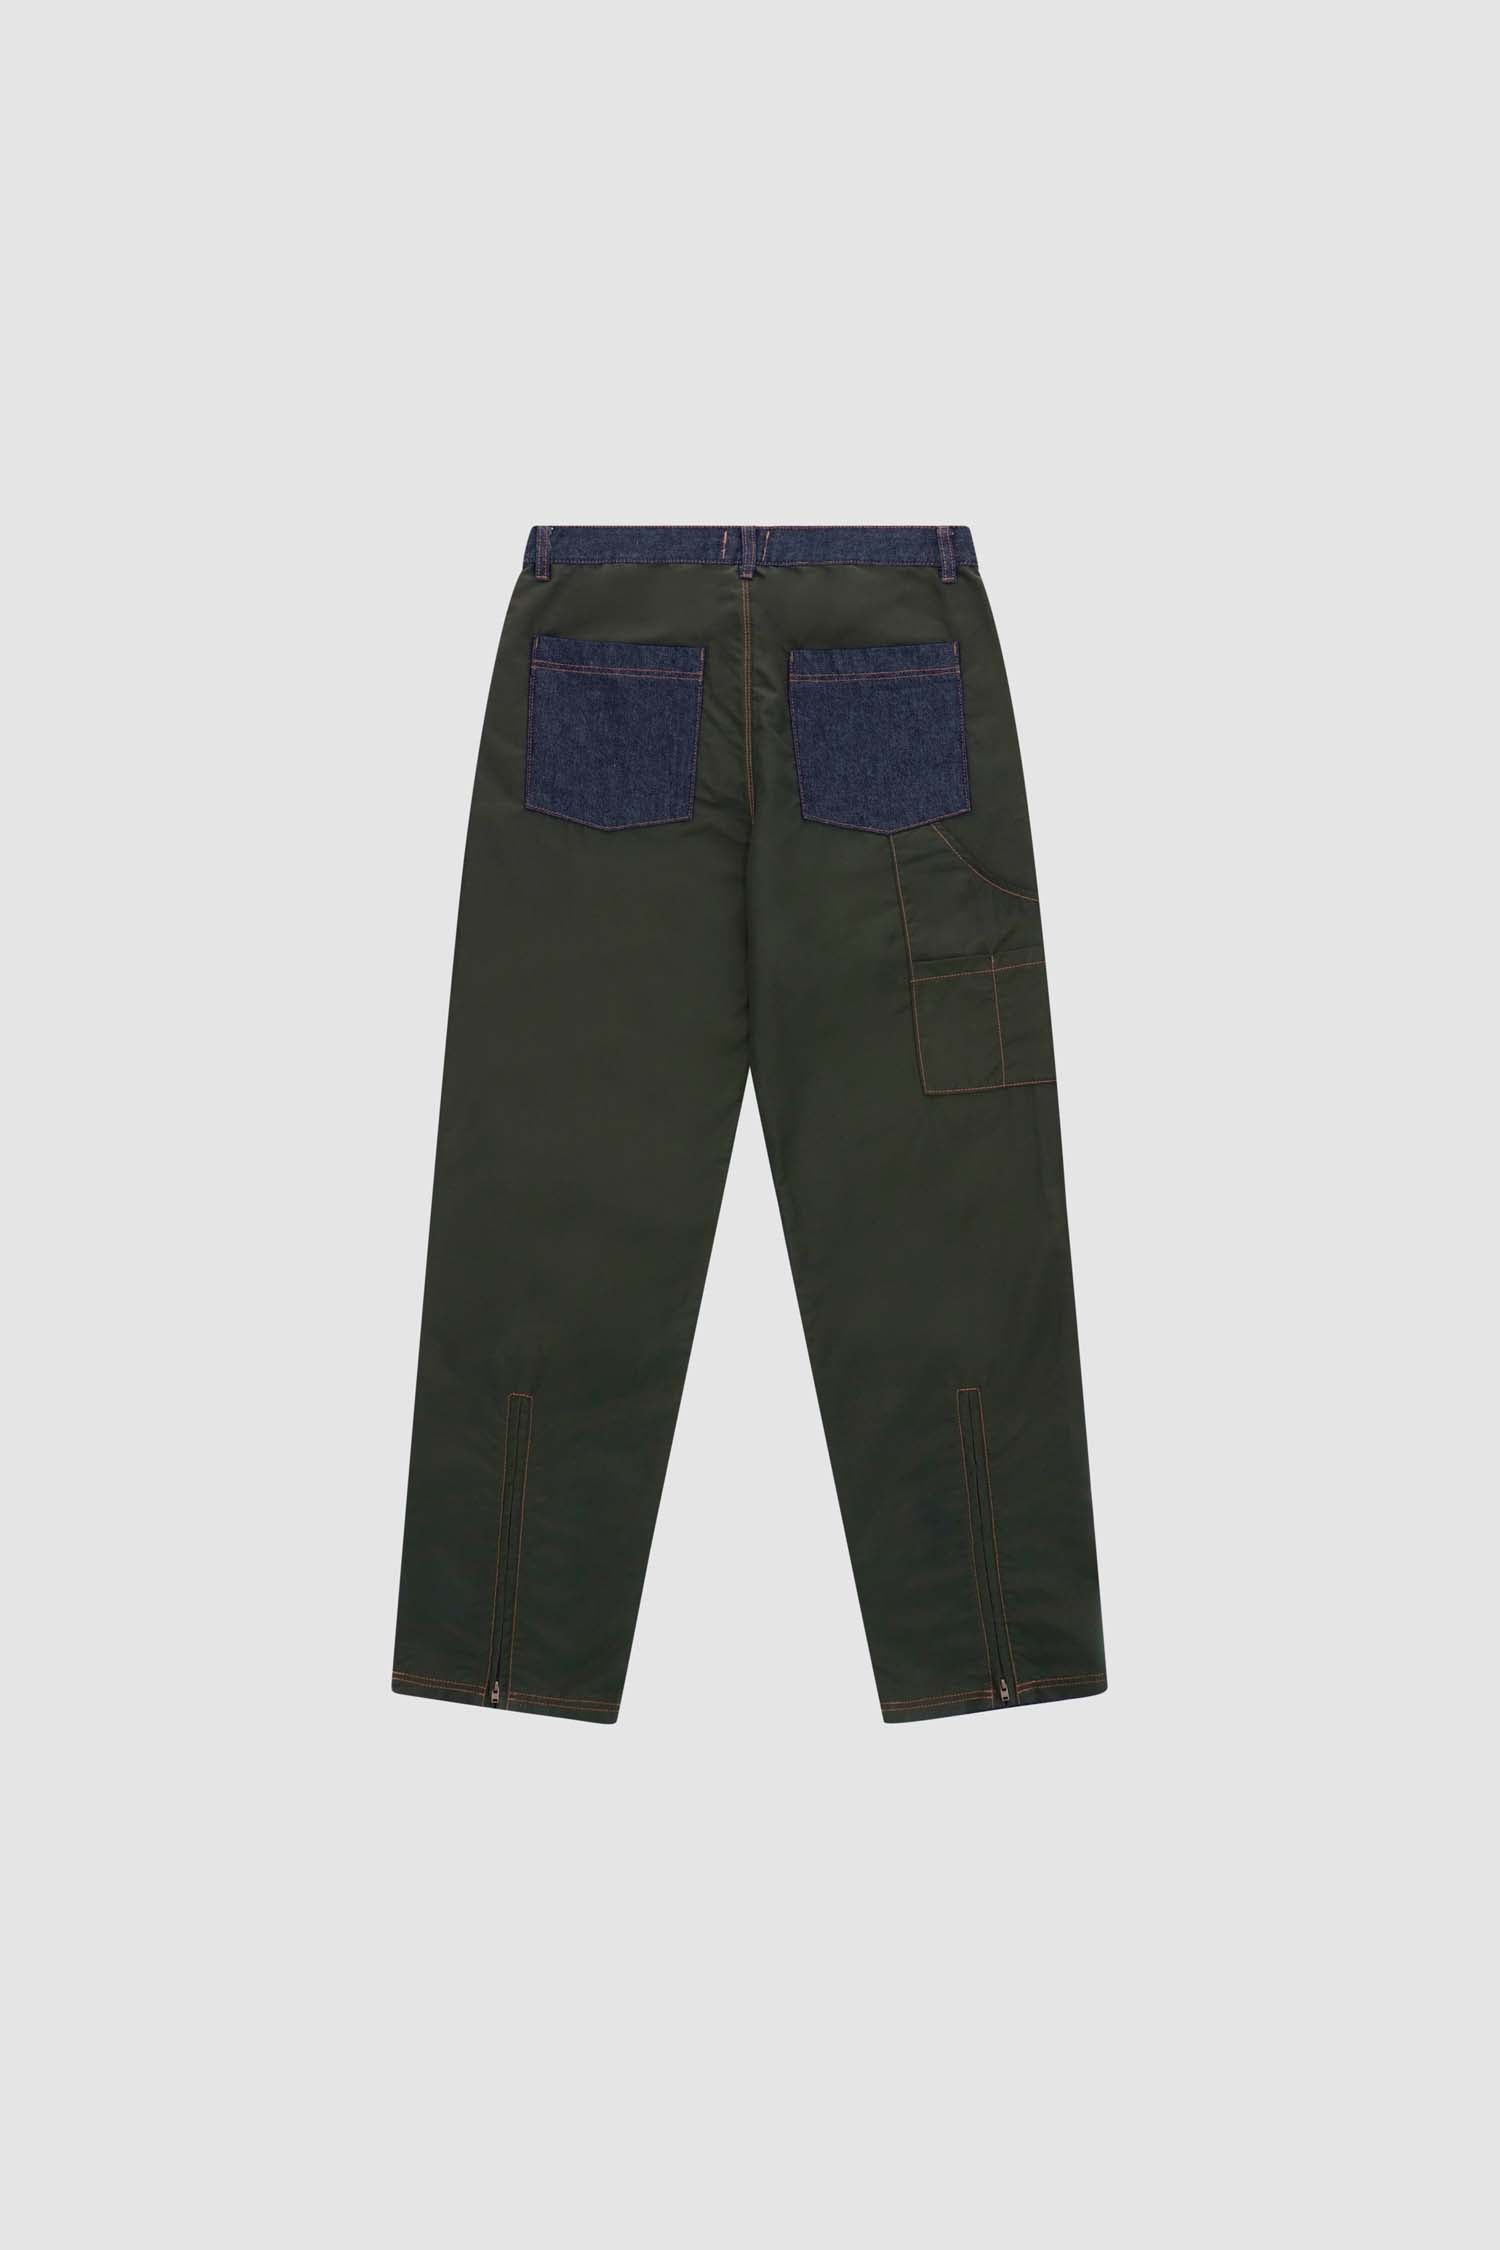 Pantalon Jones Multi - Denim/Green